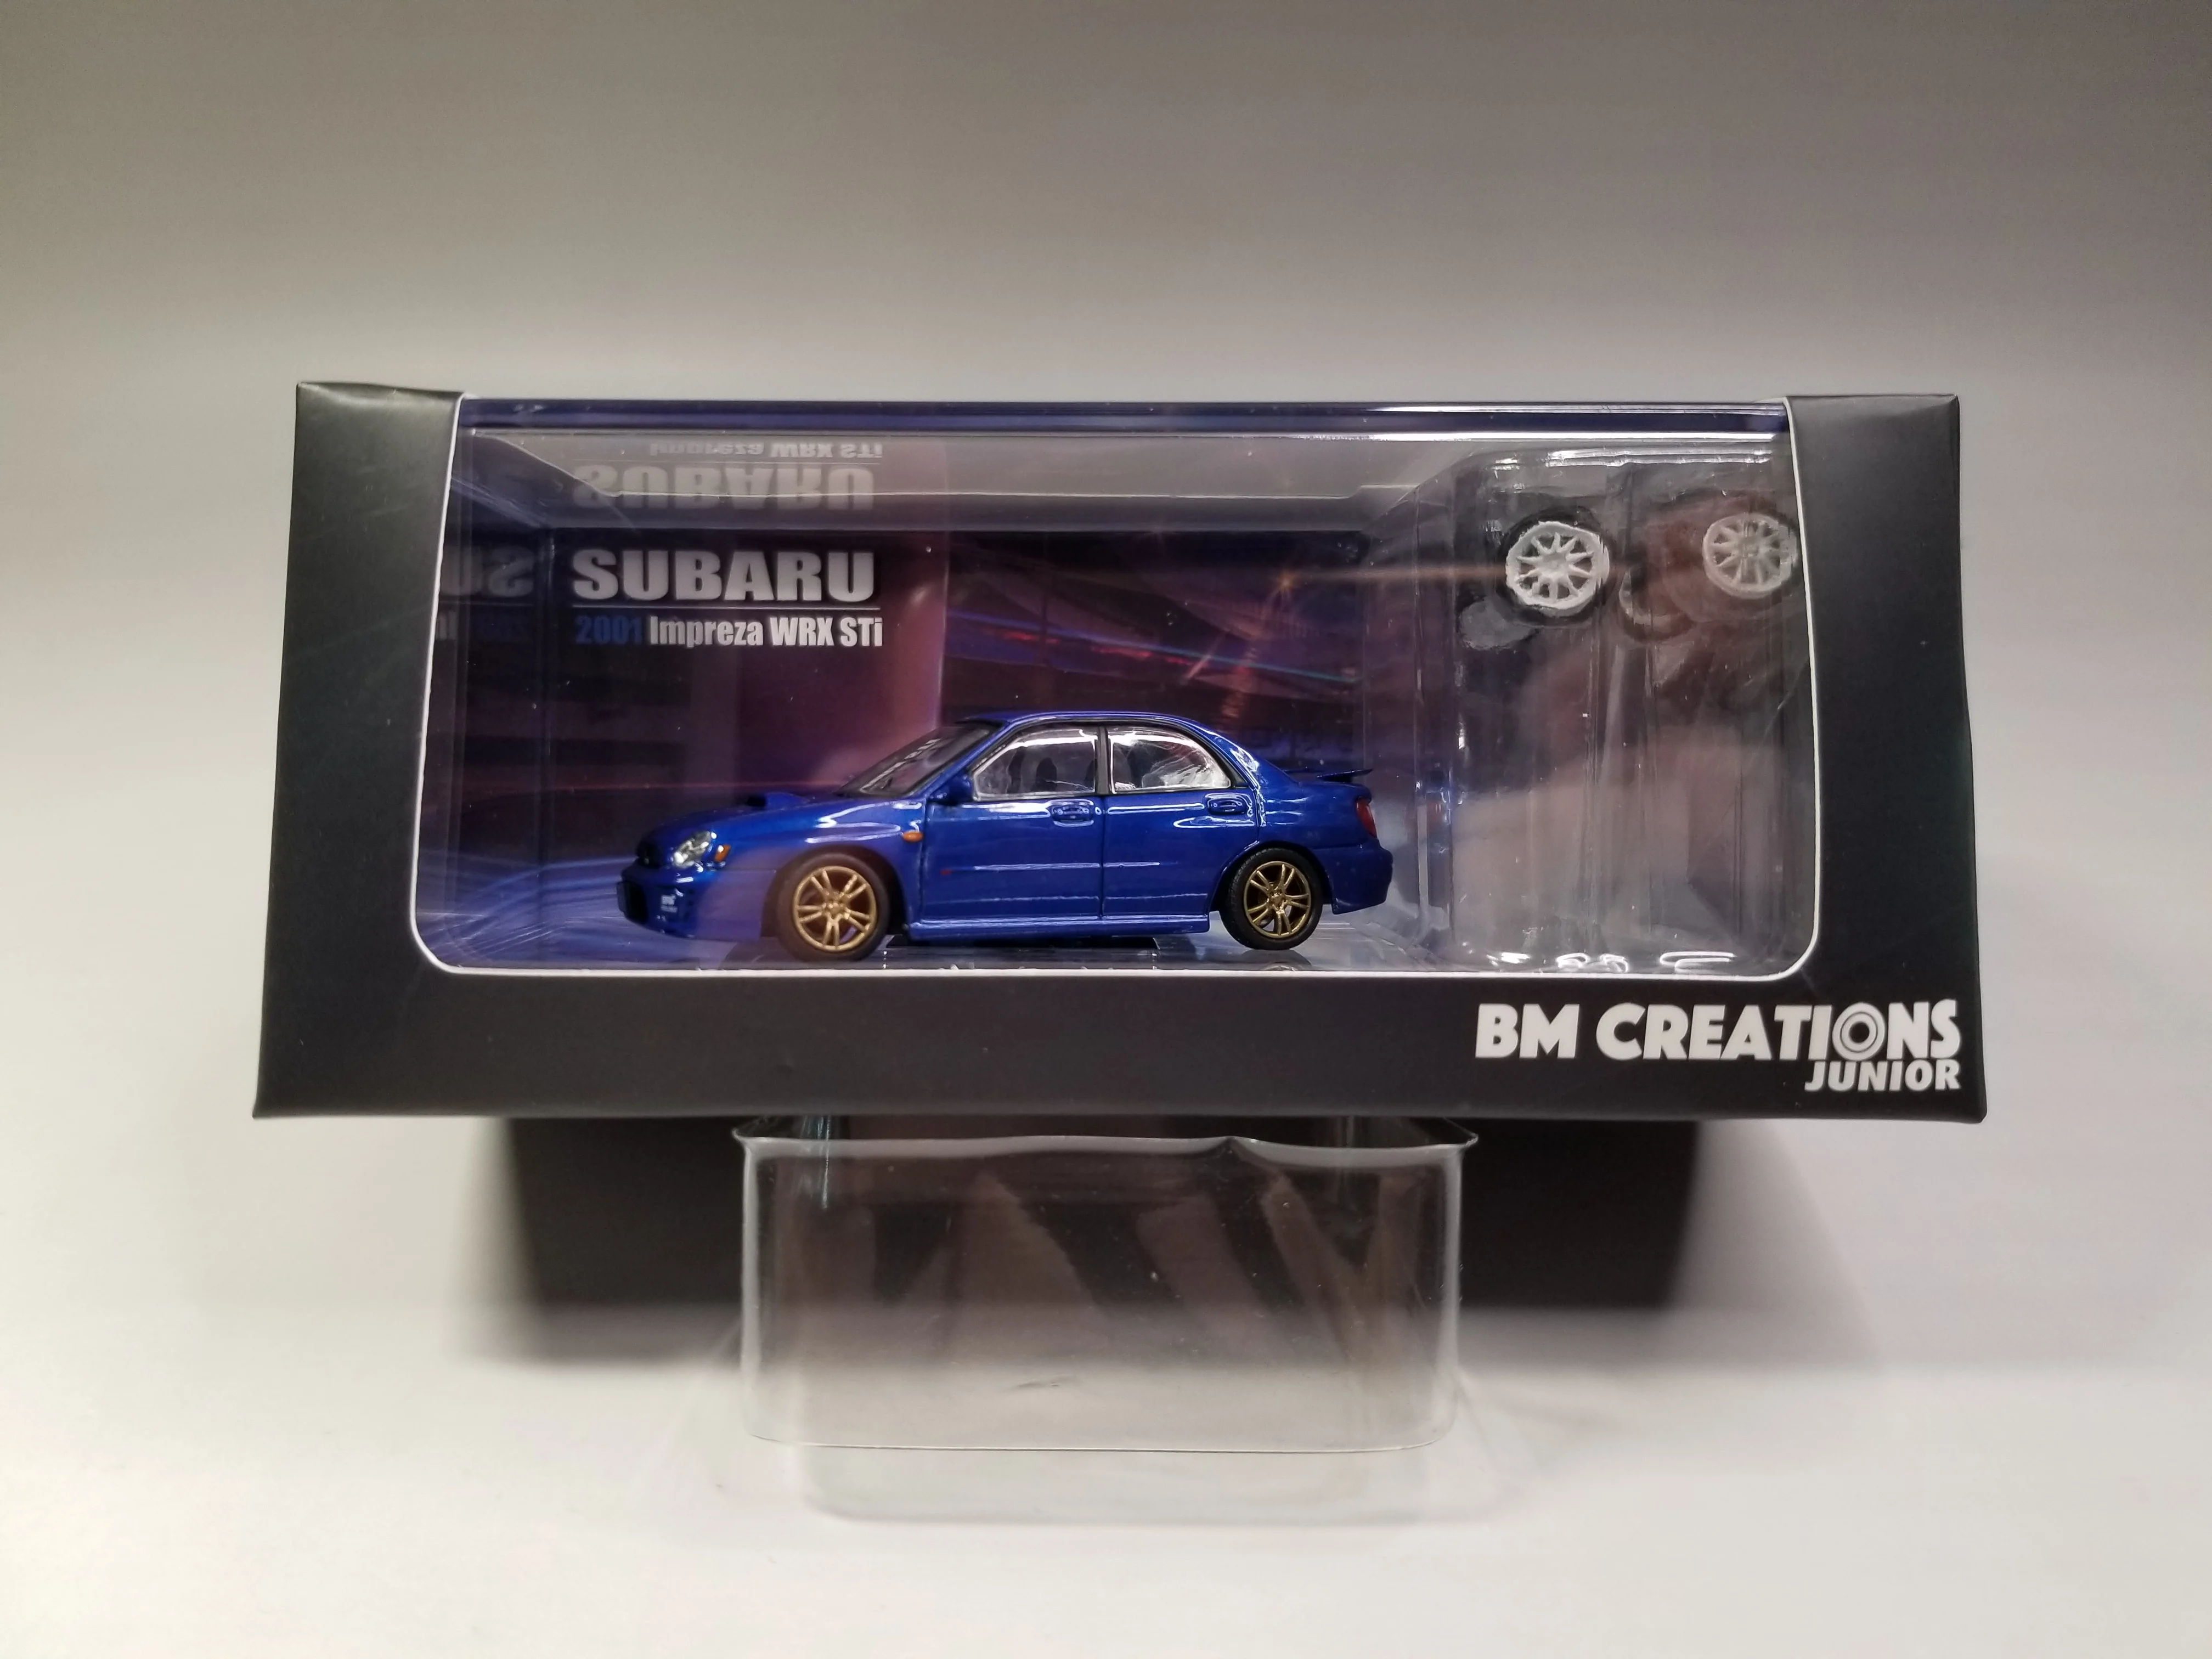 

BM Creations 1/64 2001 Subaru Impreza WRX STi 64B0079 Die Cast Model Car Collection Limited